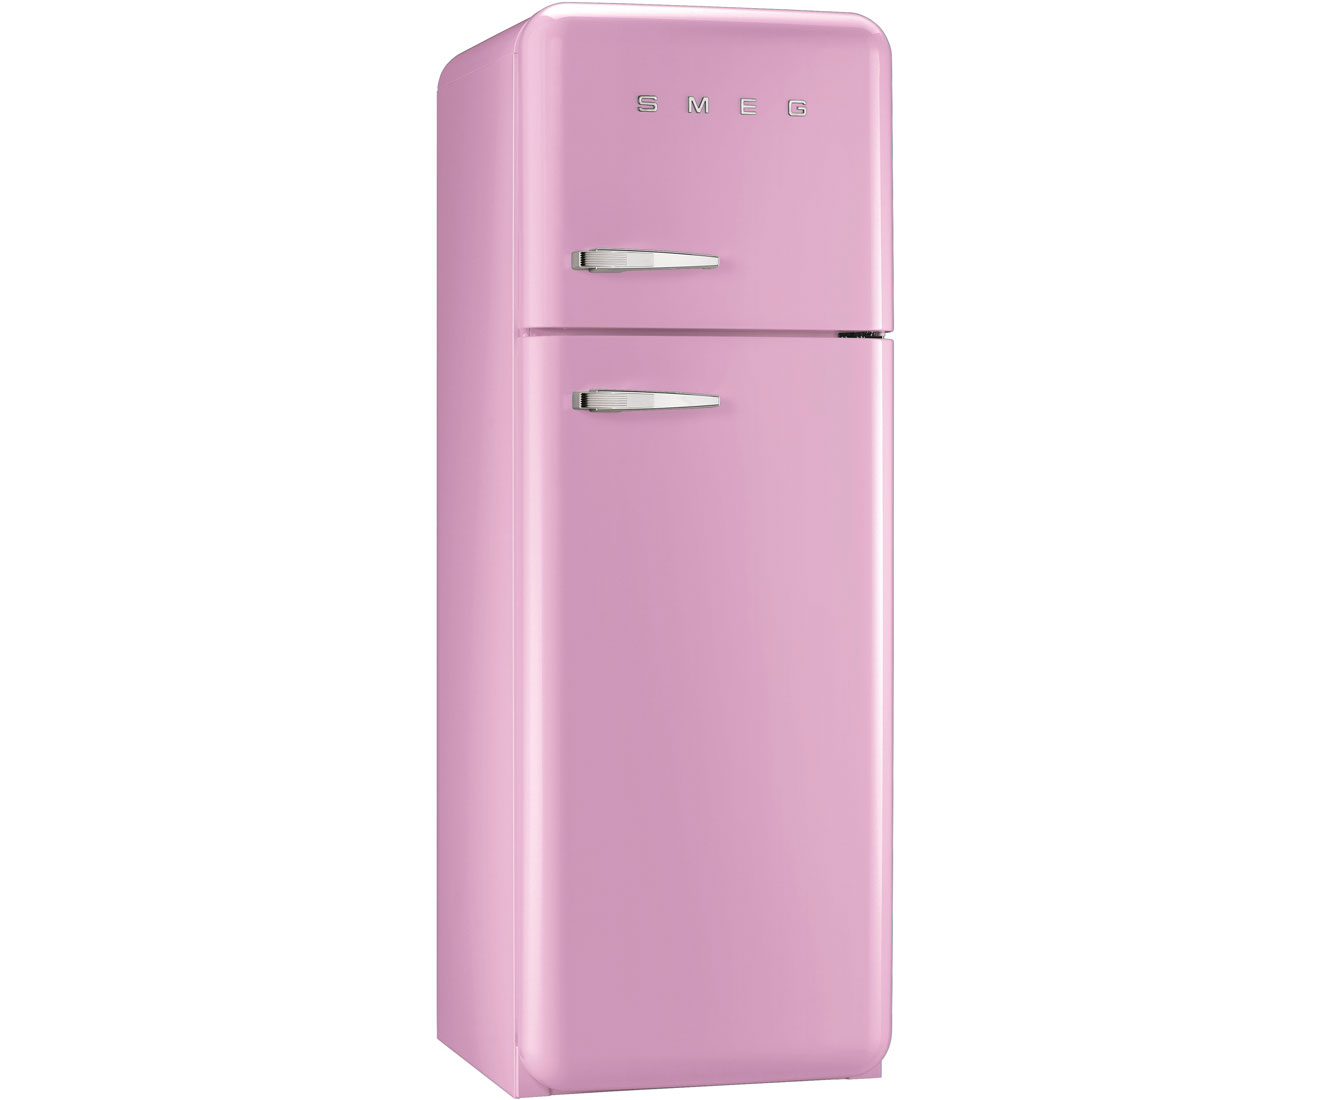 Smeg Right Hand Hinge FAB30RFP Free Standing Fridge Freezer in Pink